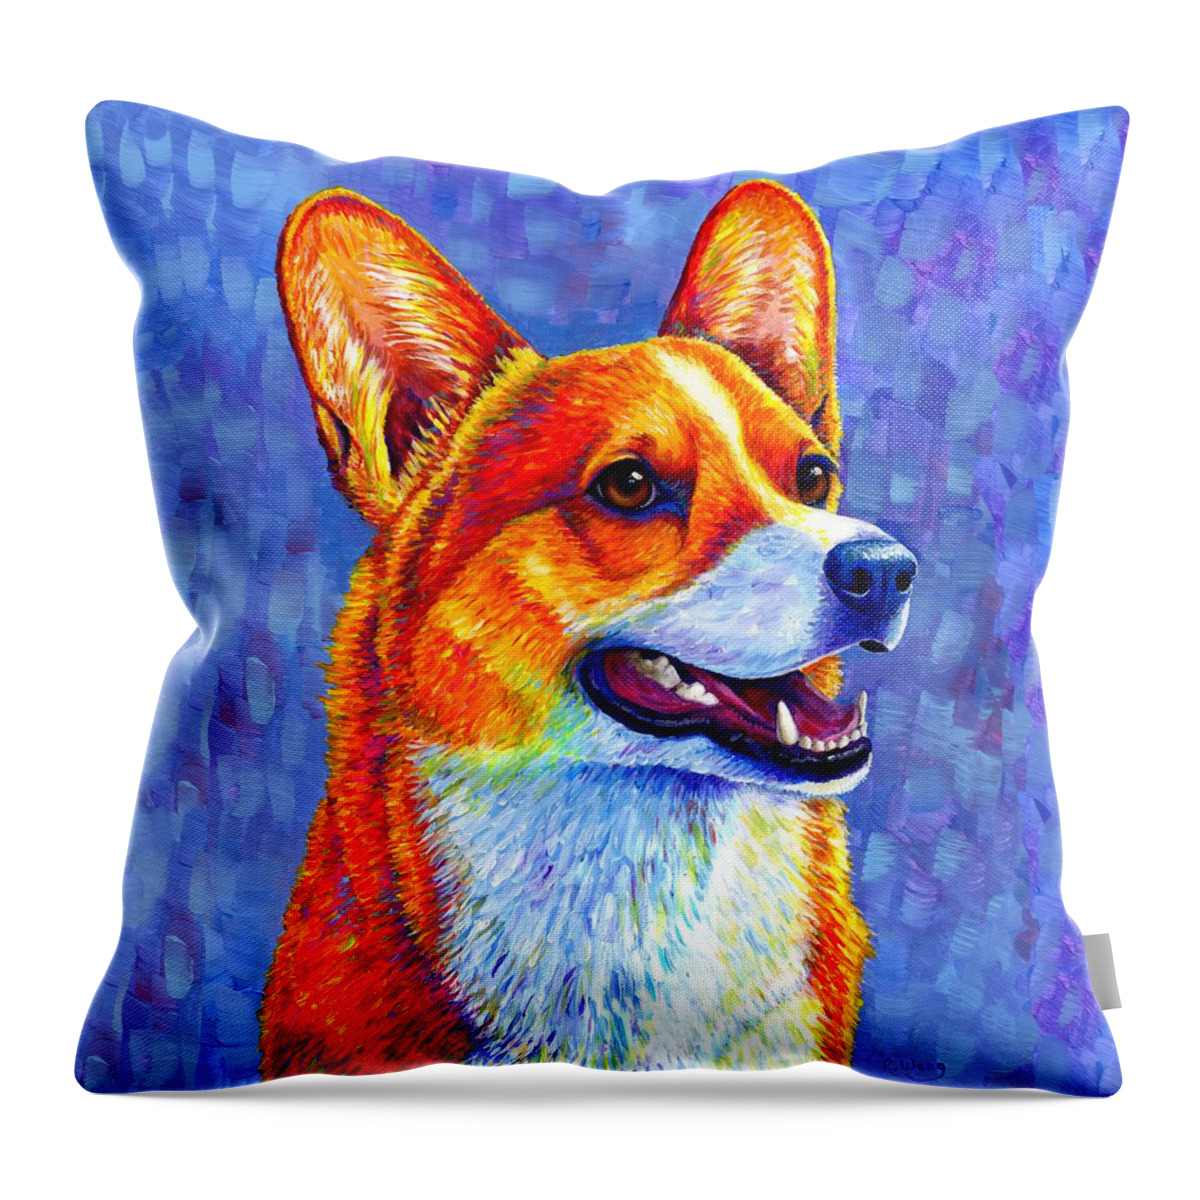 Corgi Throw Pillow featuring the painting Mischief Maker - Colorful Pembroke Welsh Corgi Dog by Rebecca Wang